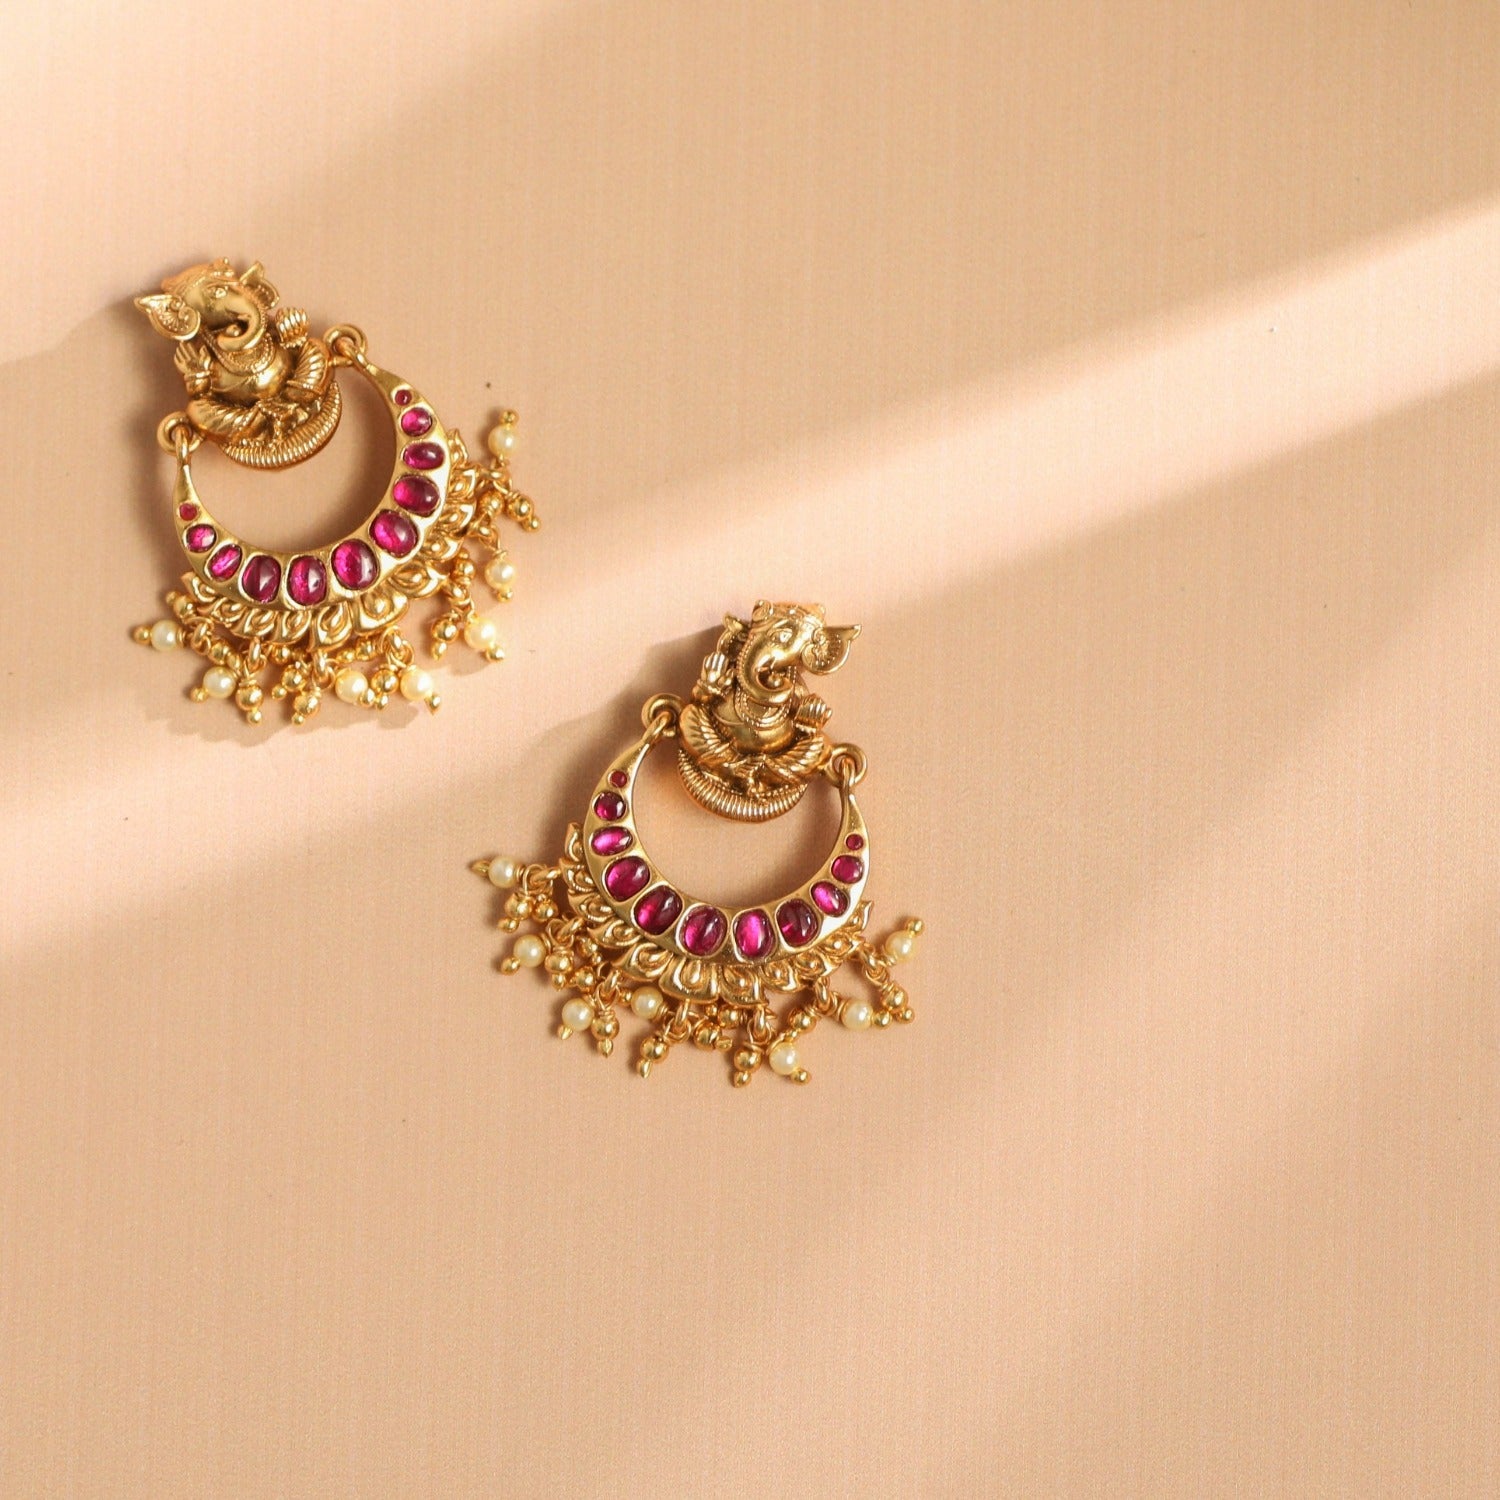 Chandbali earrings - 22K Gold Indian Jewelry in USA